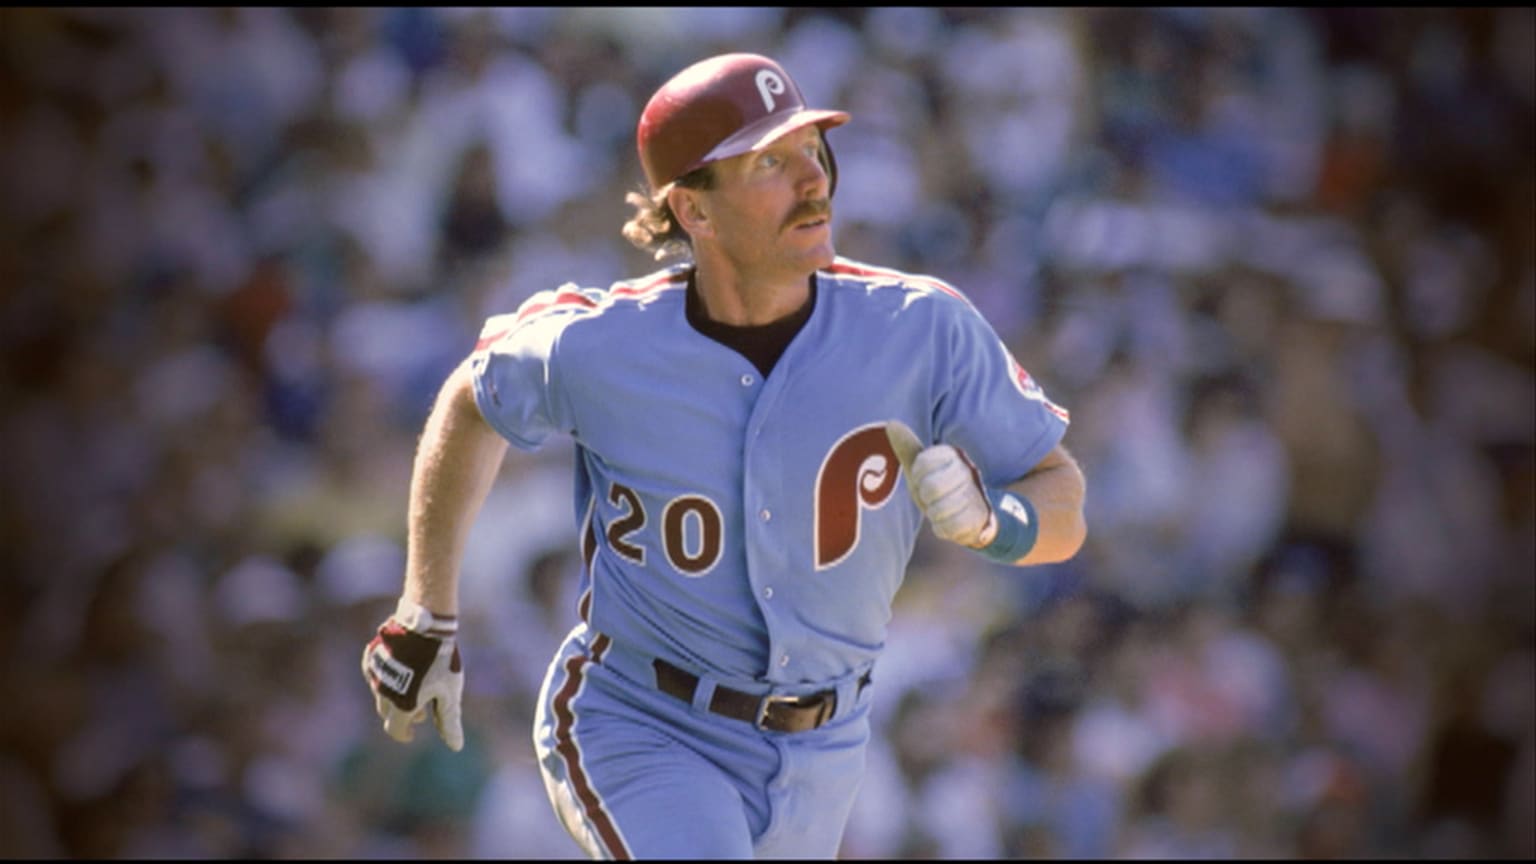 Mike Schmidt Philadelphia Phillies Jersey – Classic Authentics